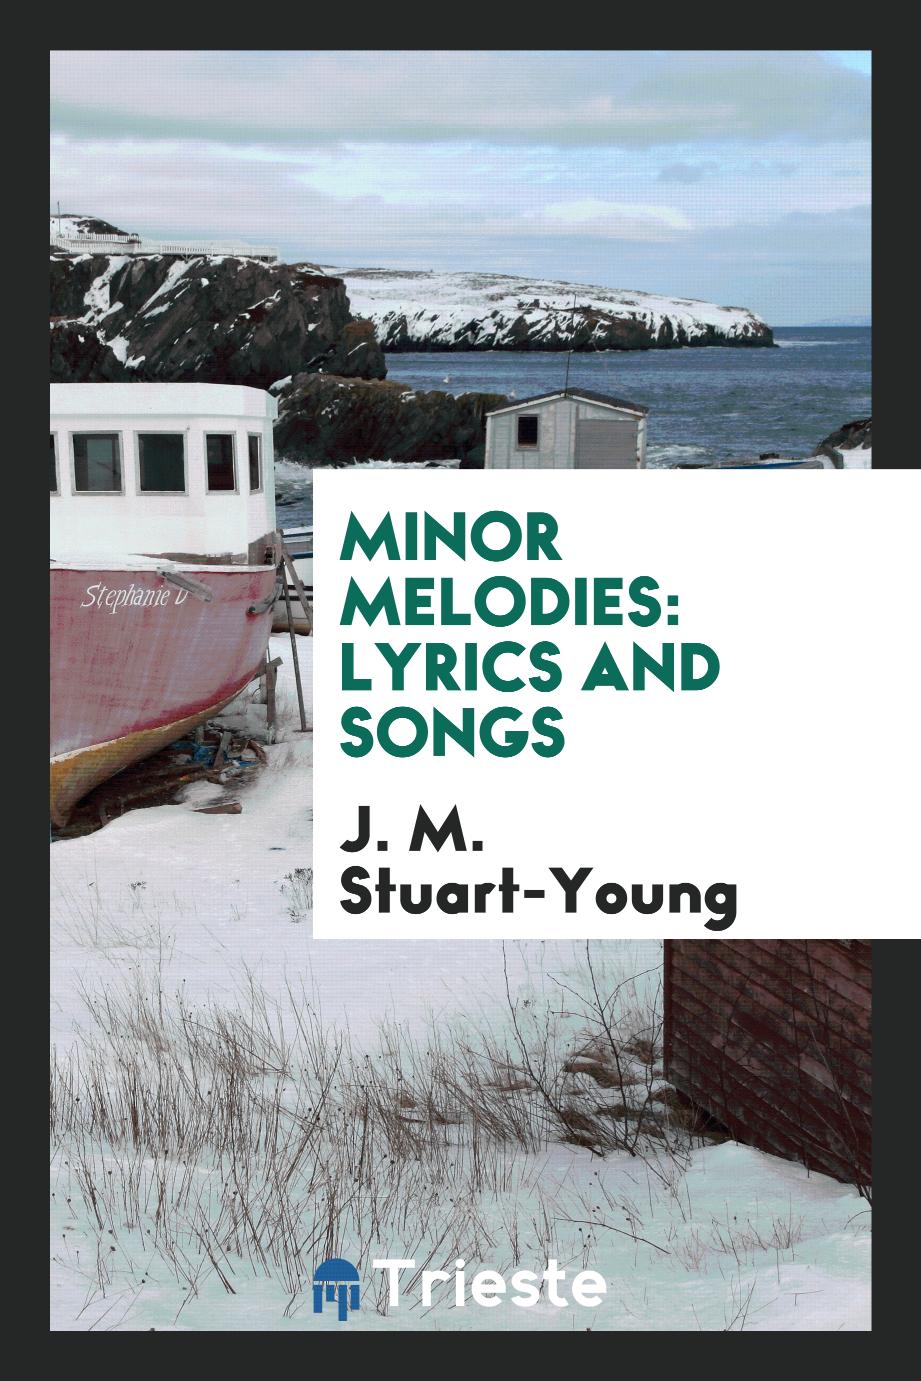 Minor melodies: lyrics and songs